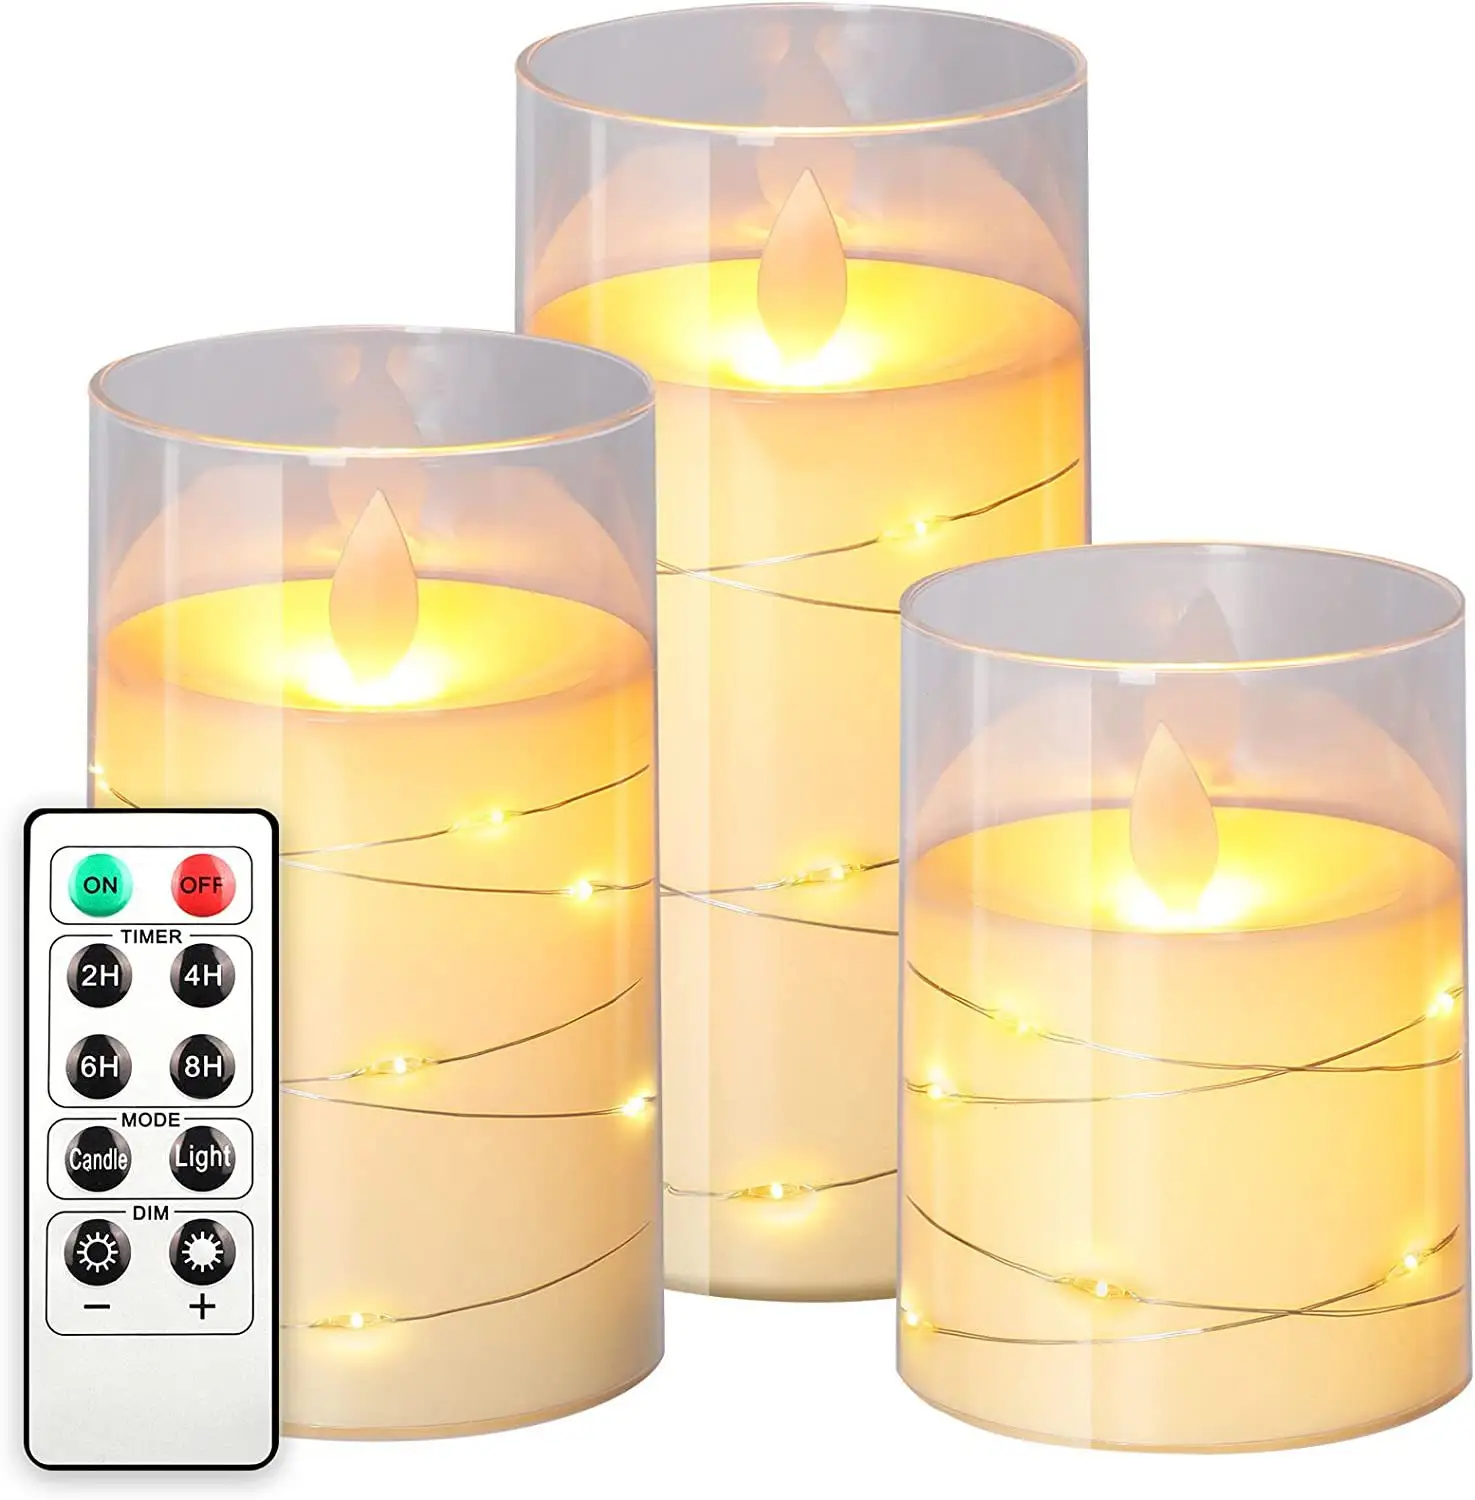 Luce a Led candele lampada filo di rame senza fiamma candela 3 pz set tecnologia prezzo all'ingrosso candele di luce a led